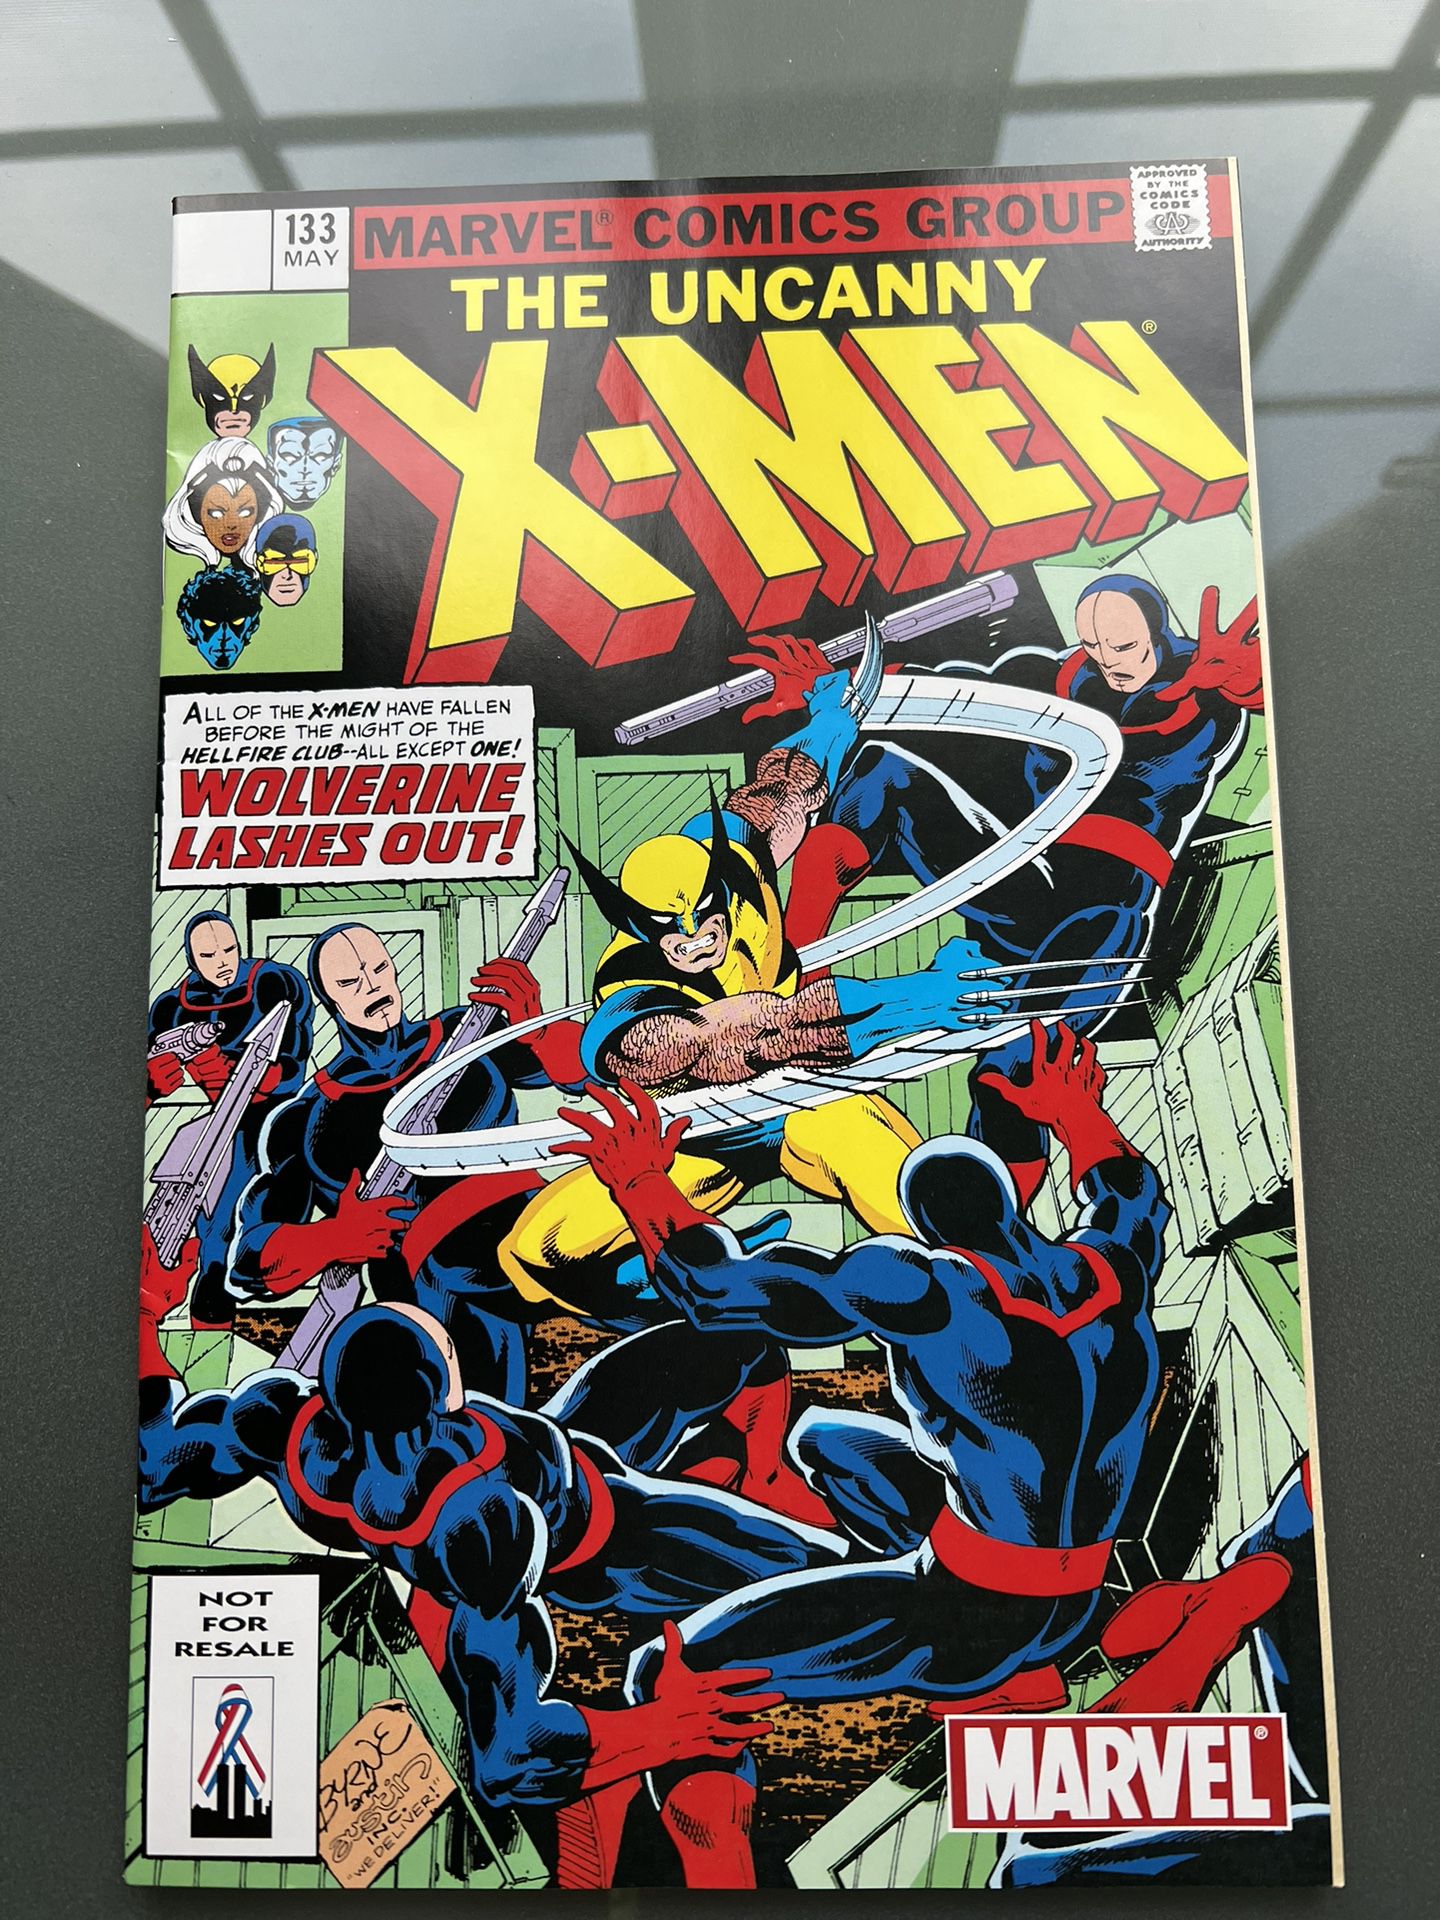 Uncanny X-men #133